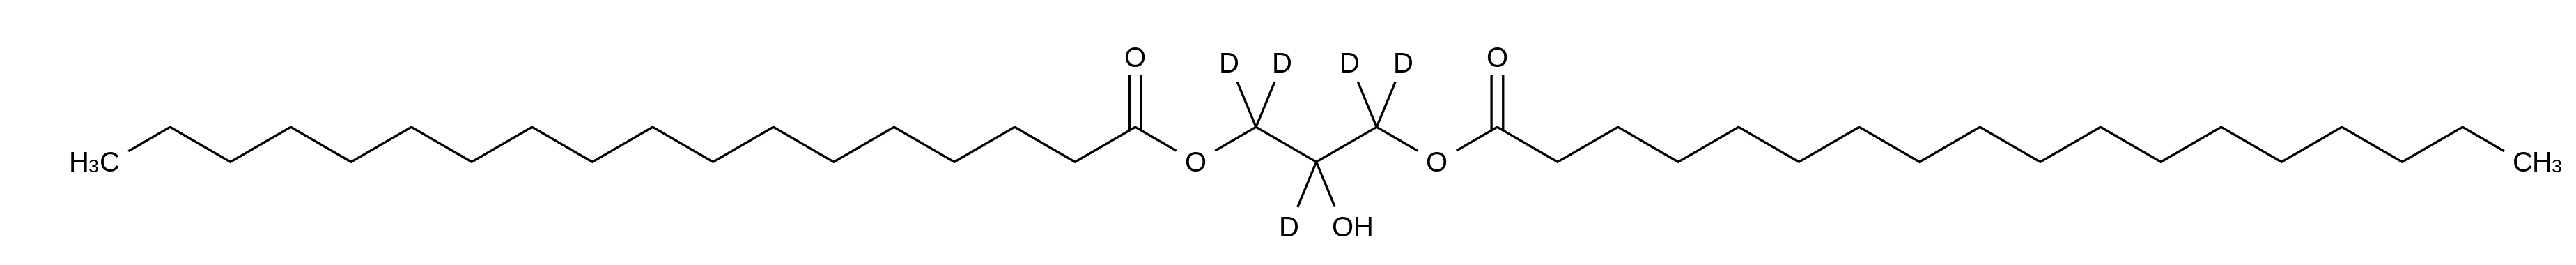 Glyceryl 1,3-Distearate-d<sub>5</sub>